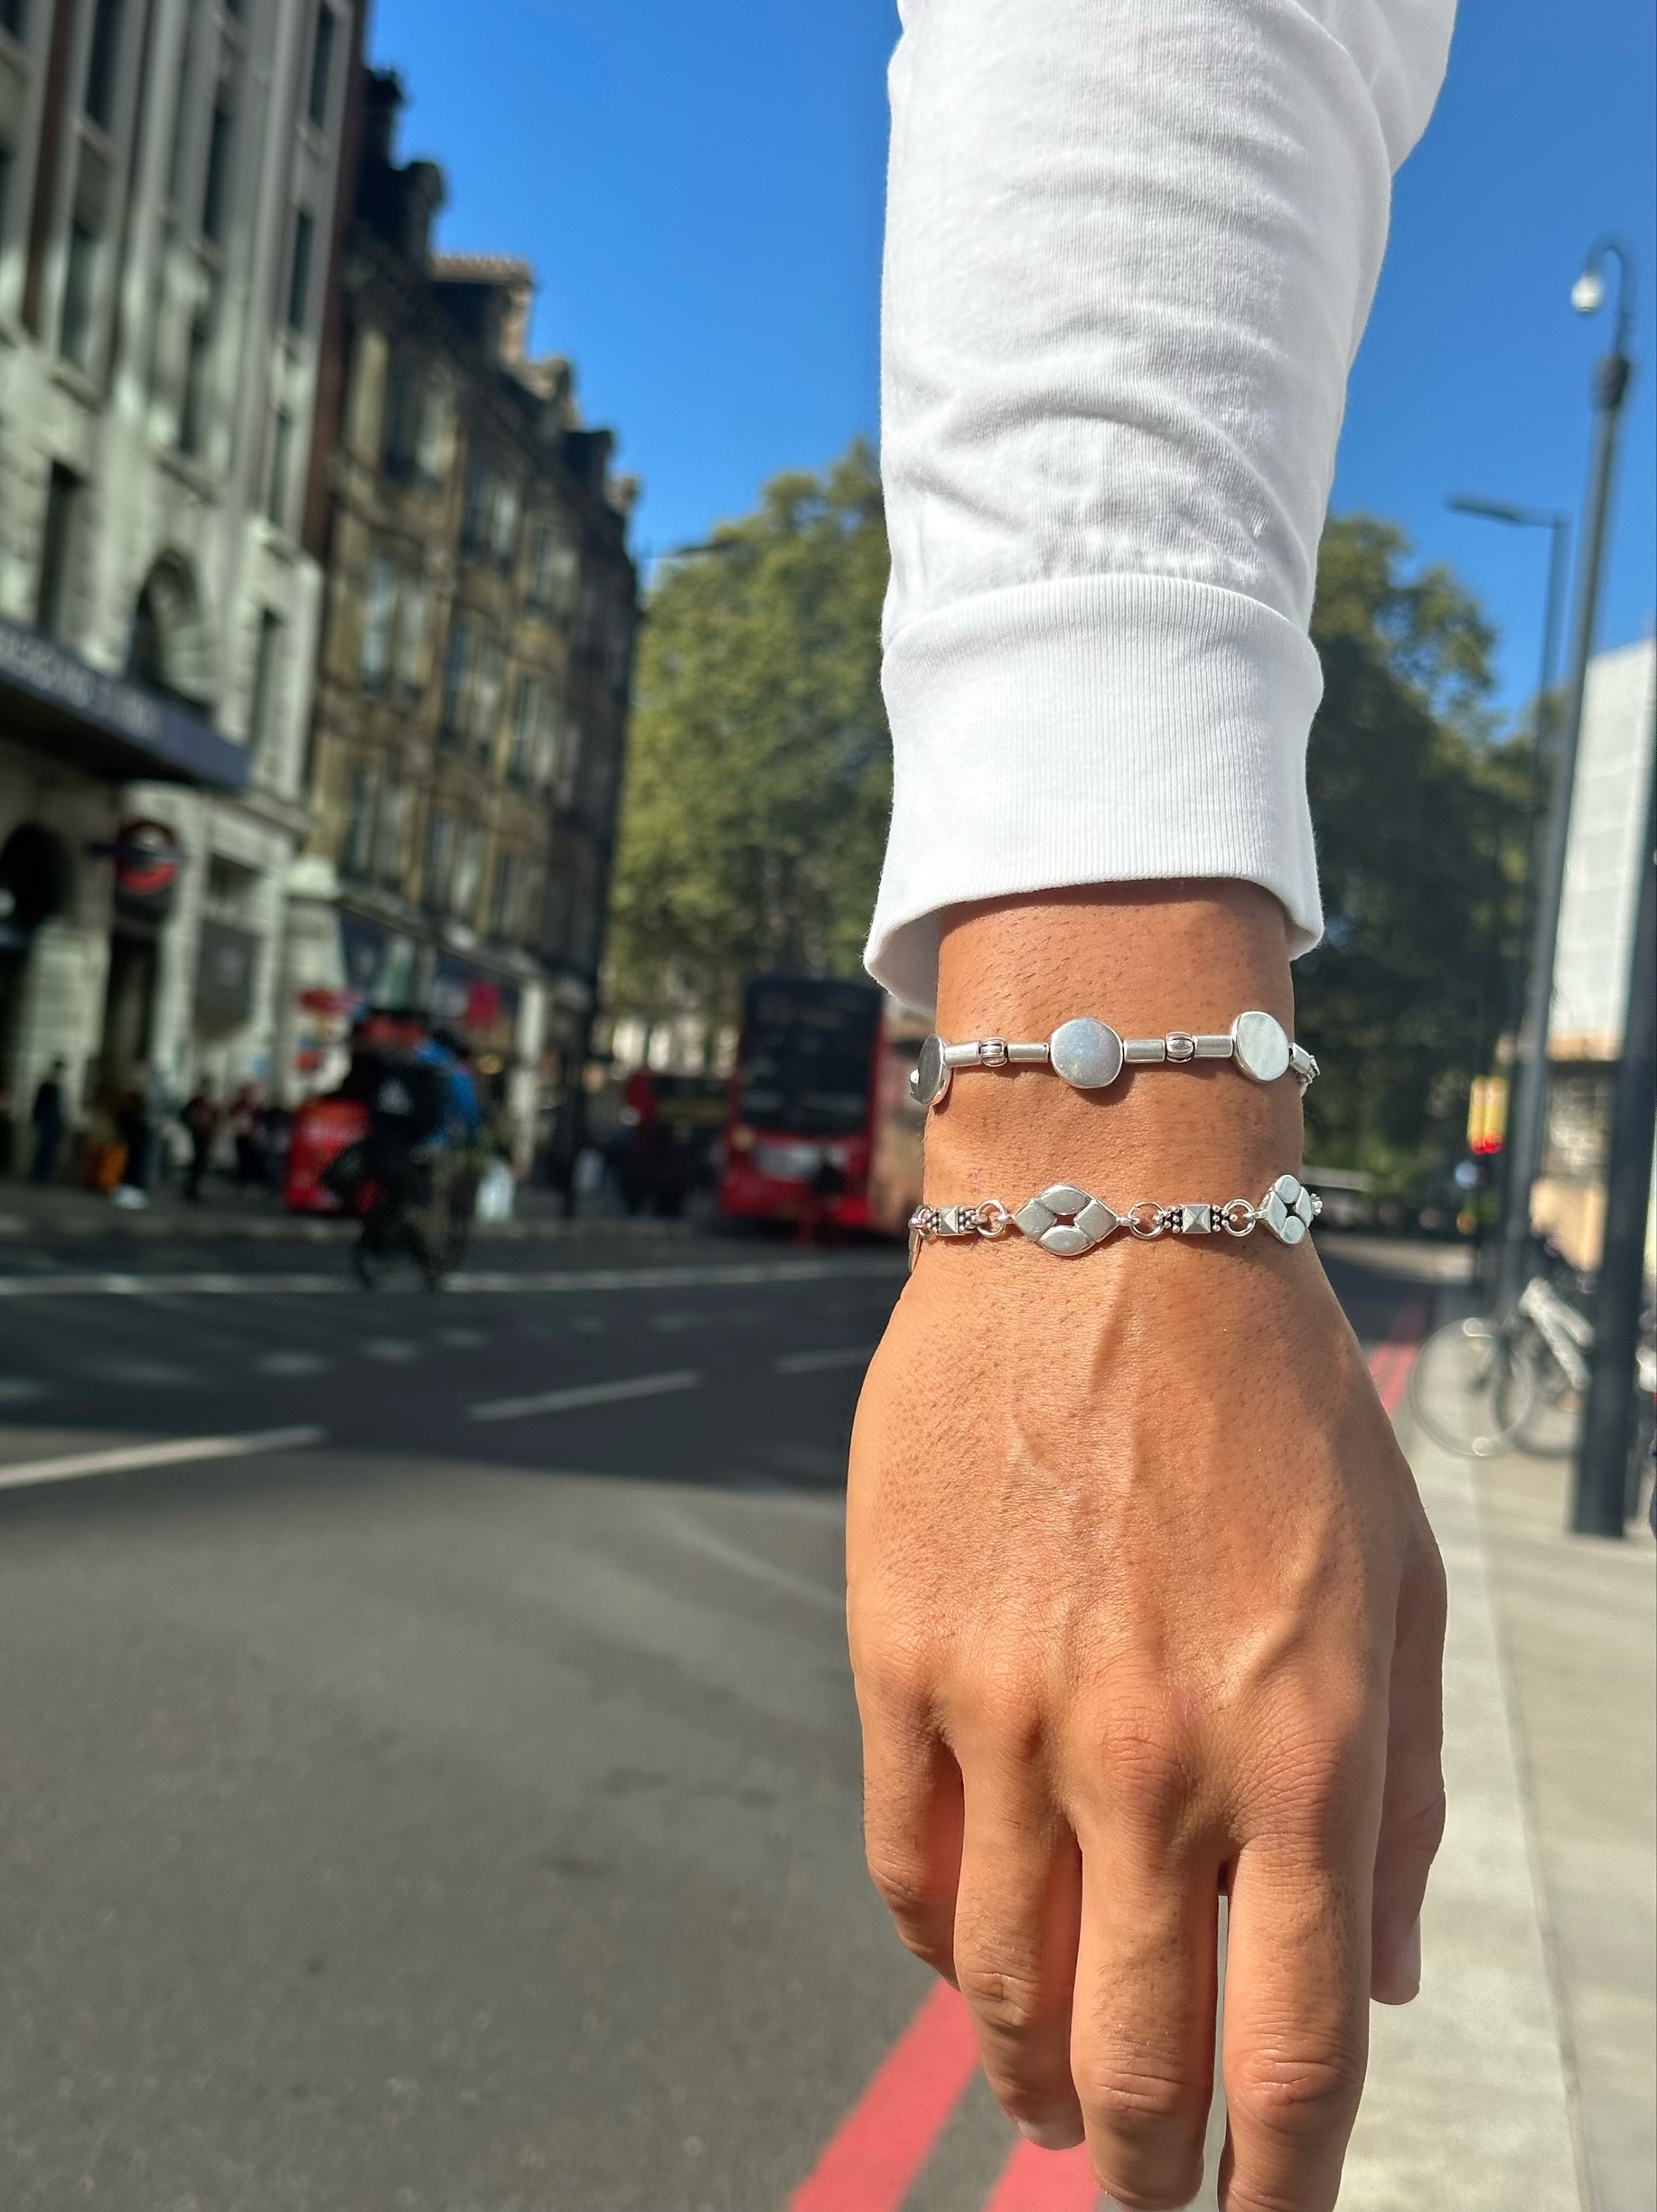 Men's Bracelet, White Beads Bracelet, Men's Jewelry, Made in Greece, by Christina Christi Jewels.